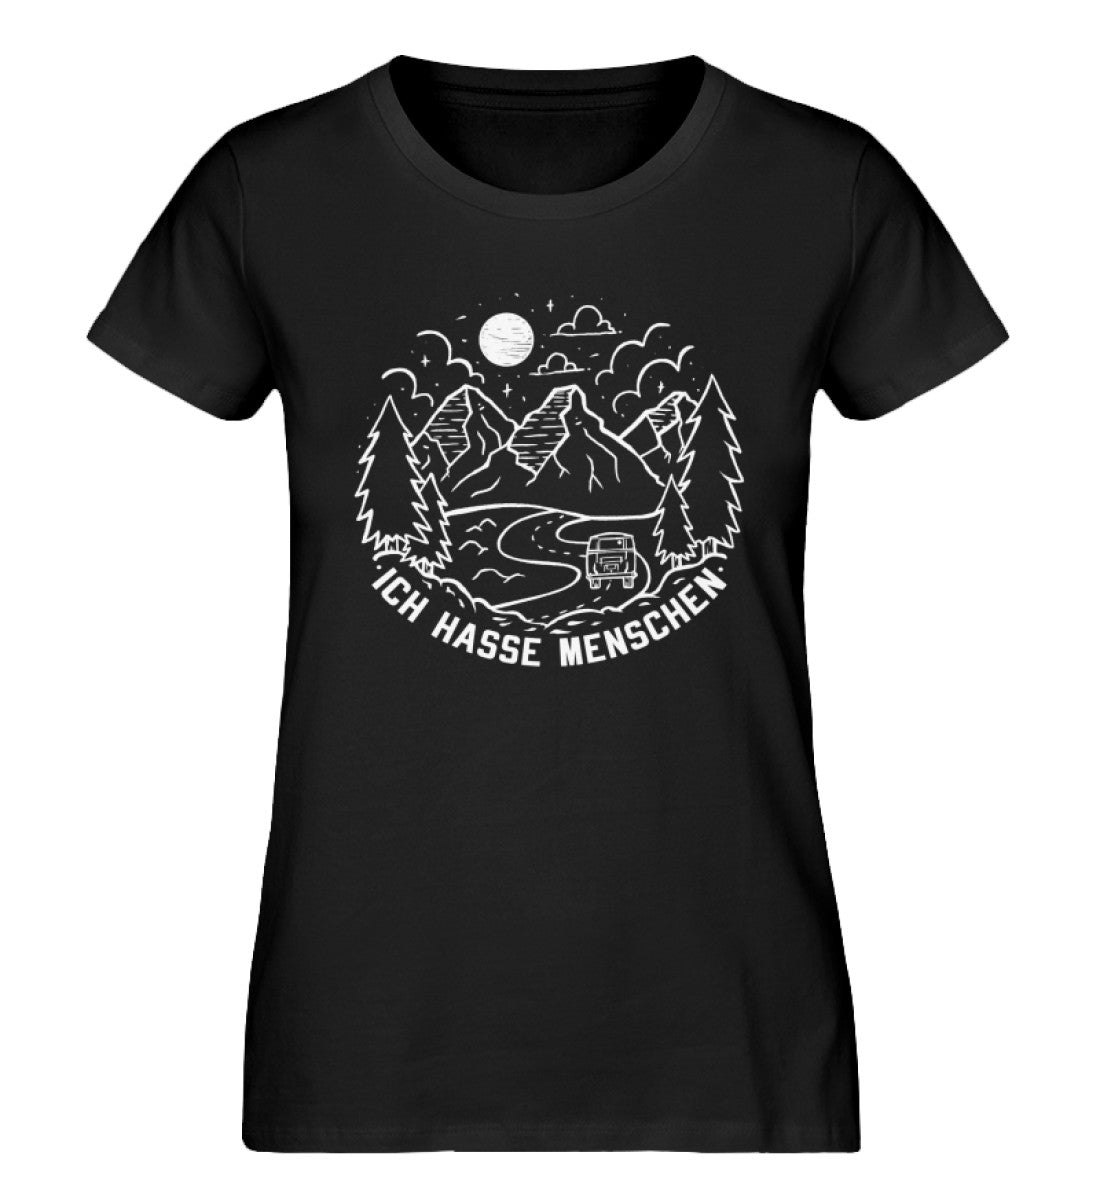 Ich hasse Menschen - Damen Organic T-Shirt camping Schwarz